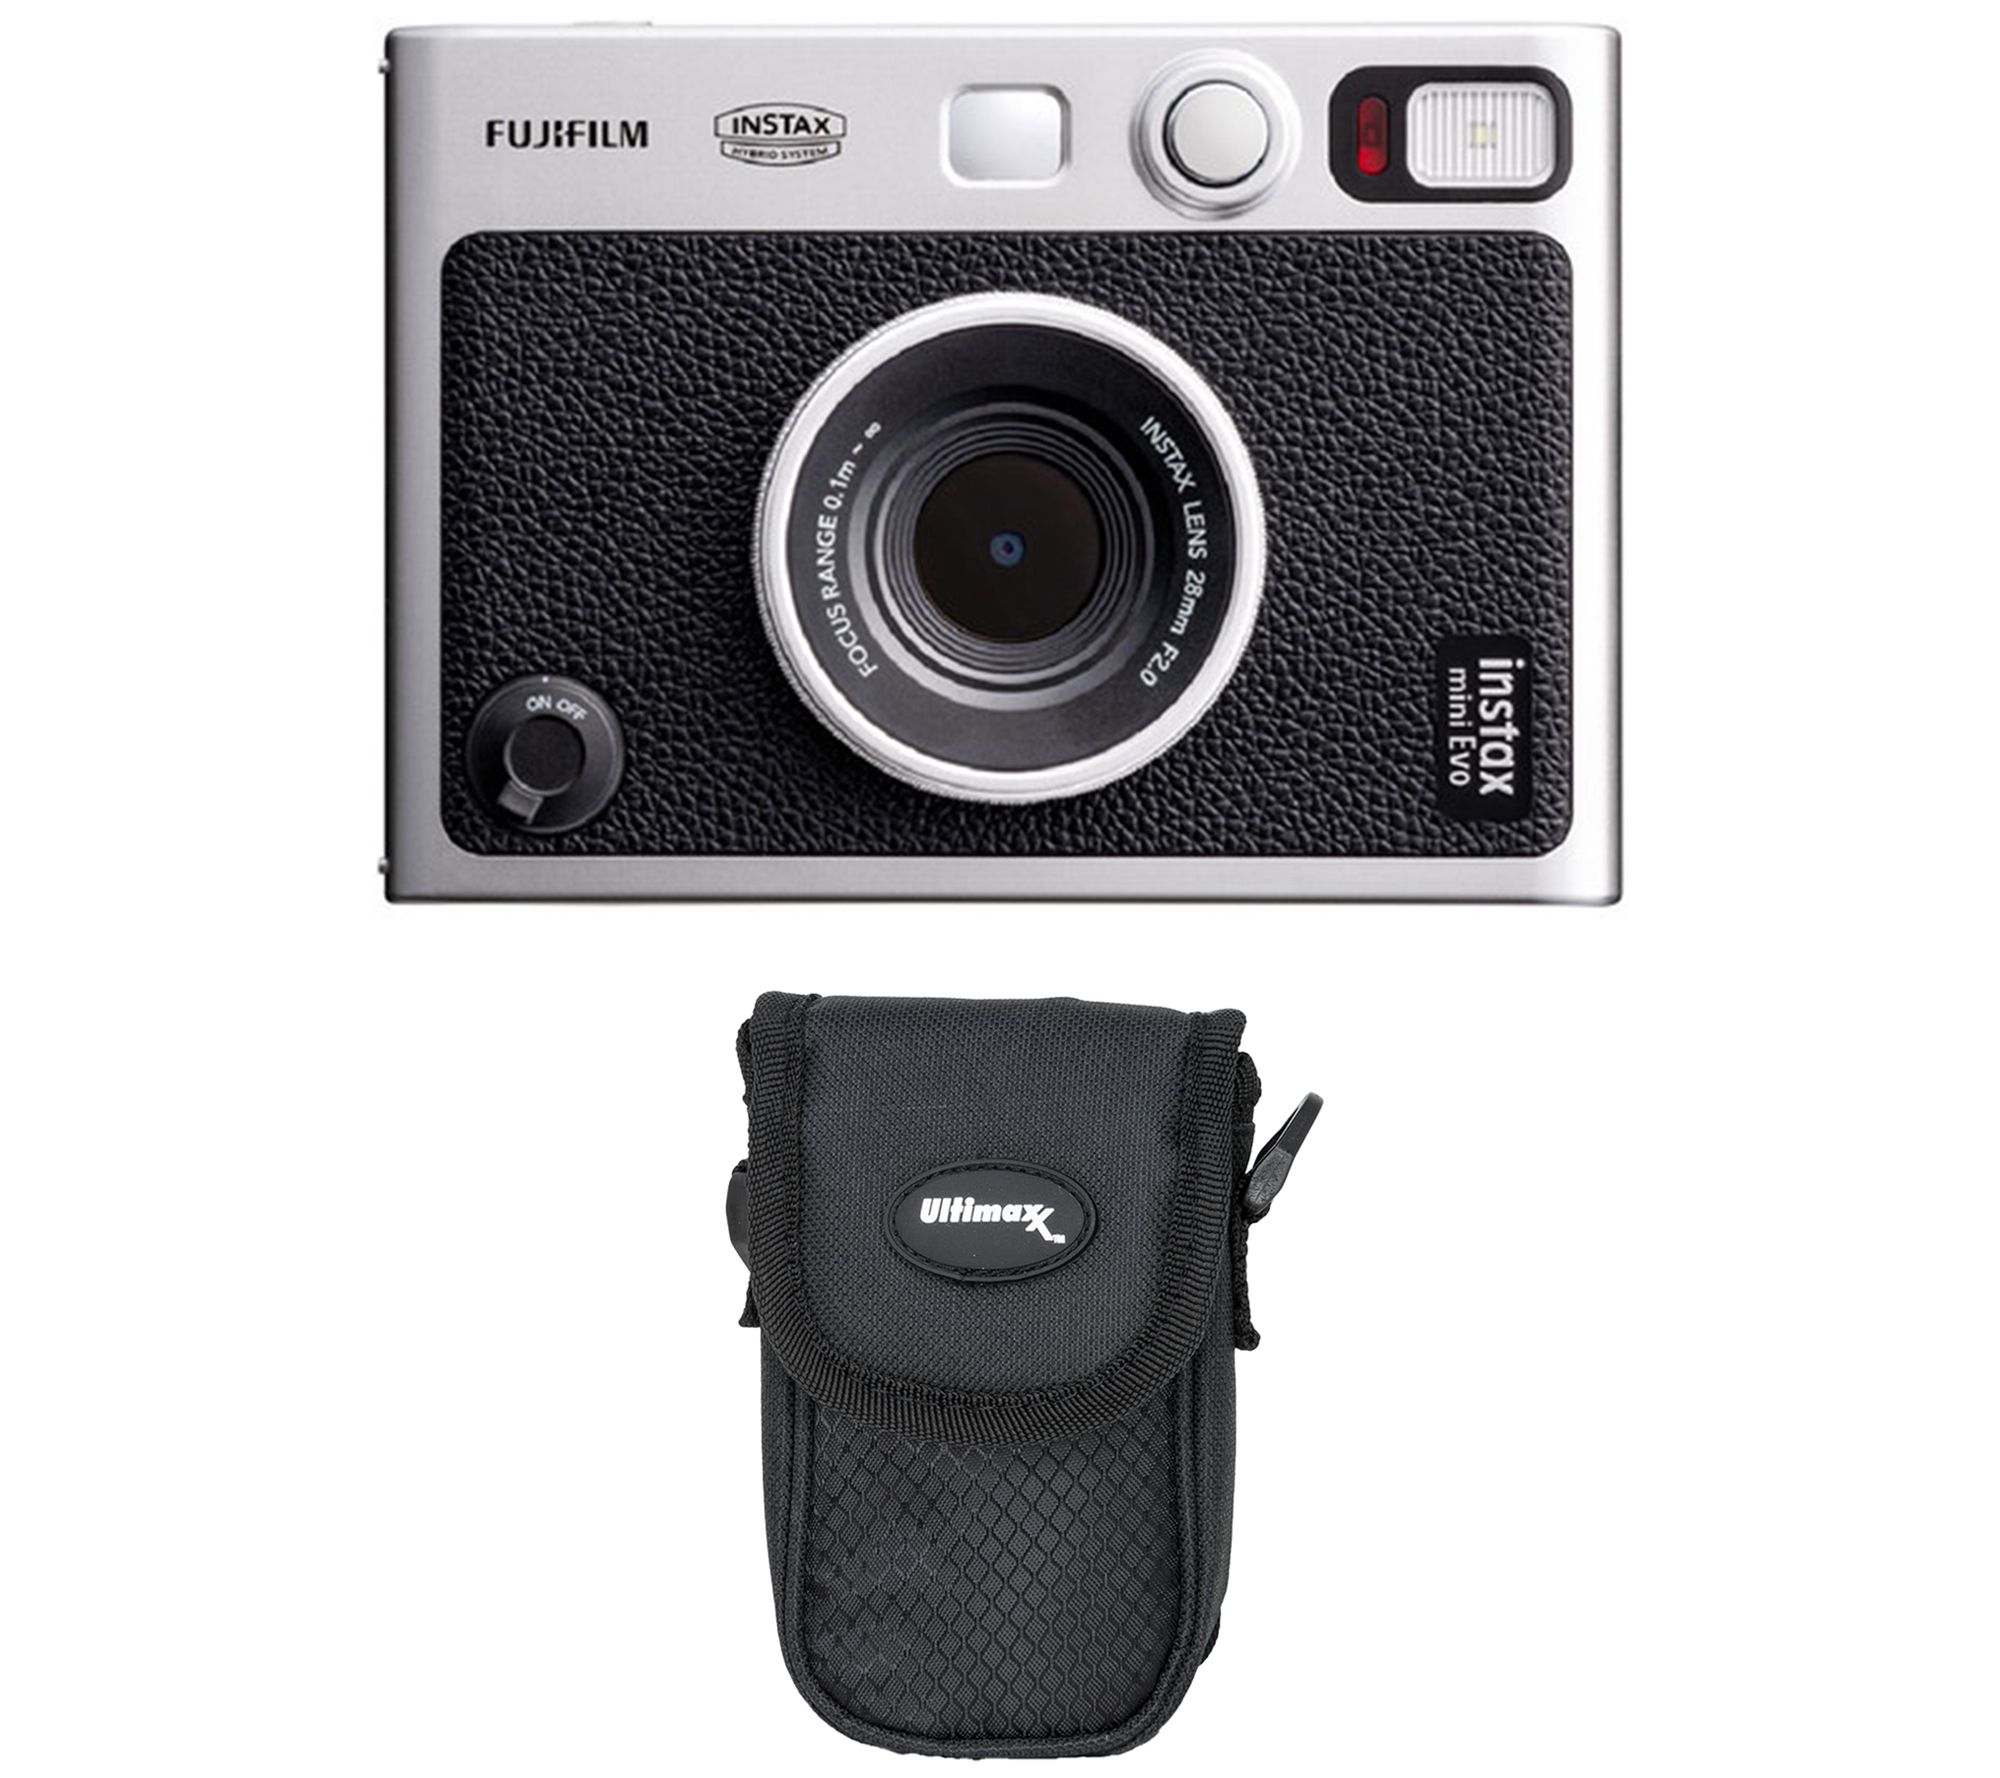 FujiFilm Instax Hybrid Instant Camera